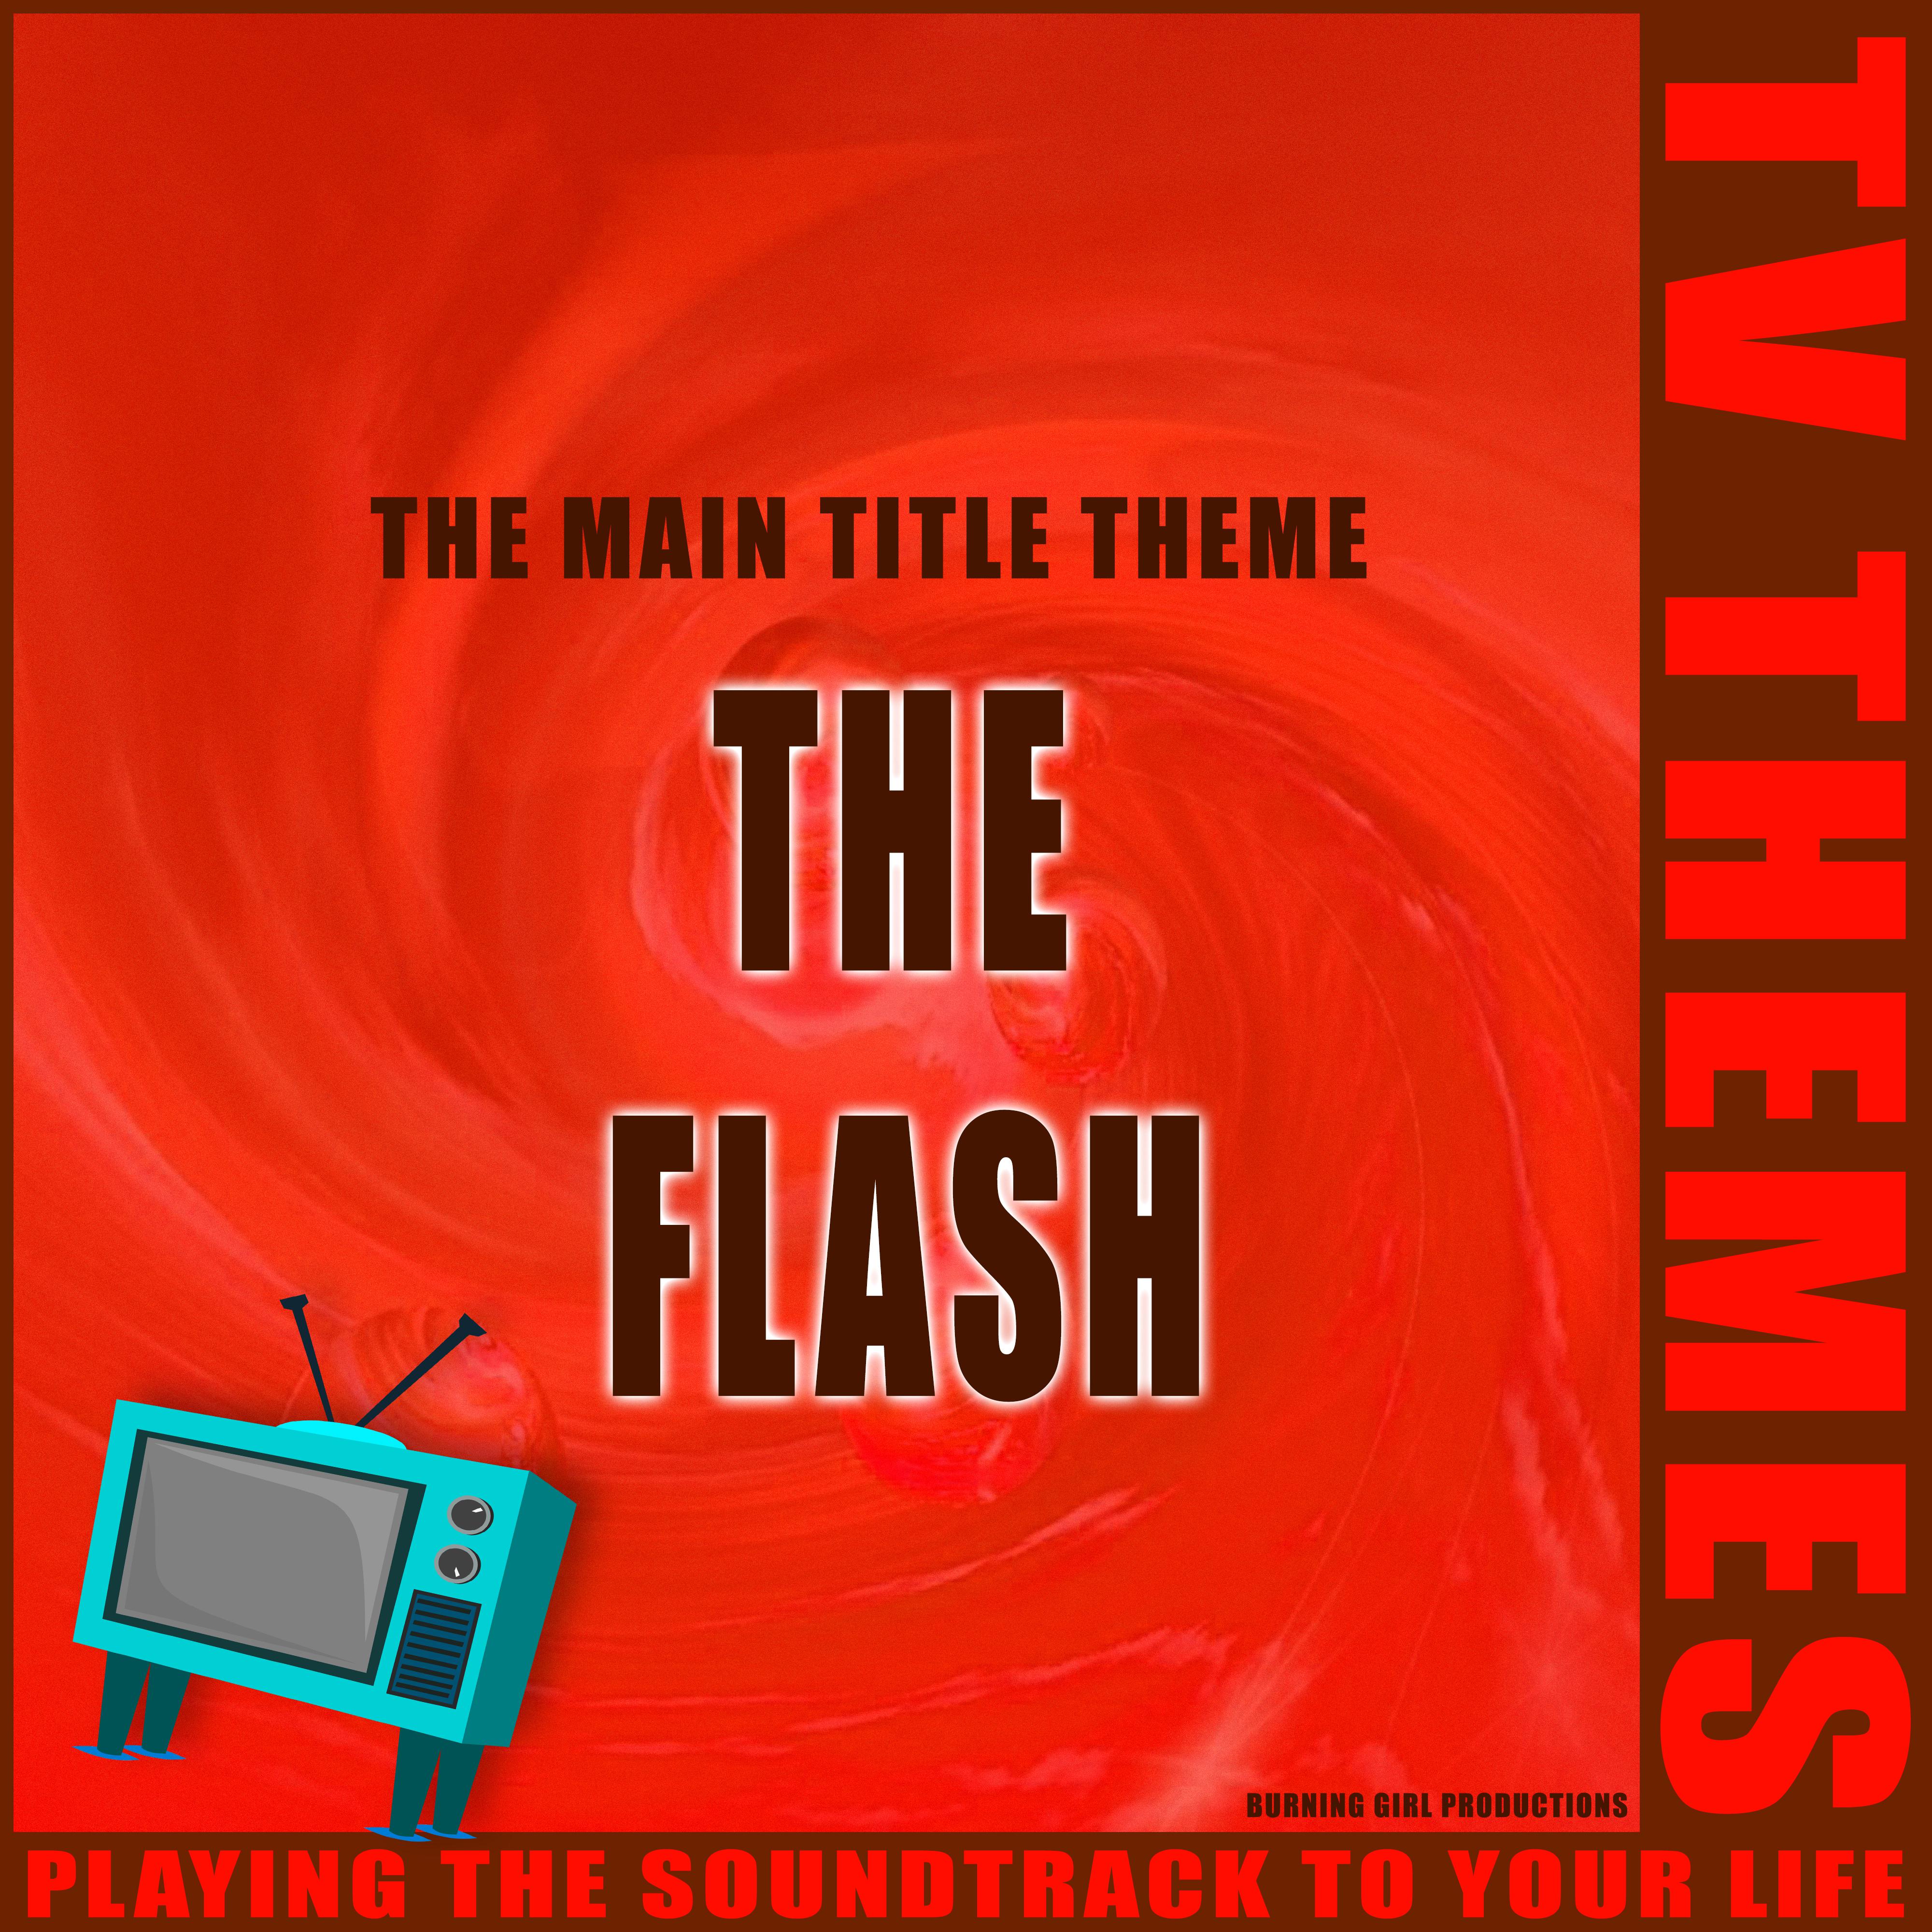 The Main Title Theme - Flash